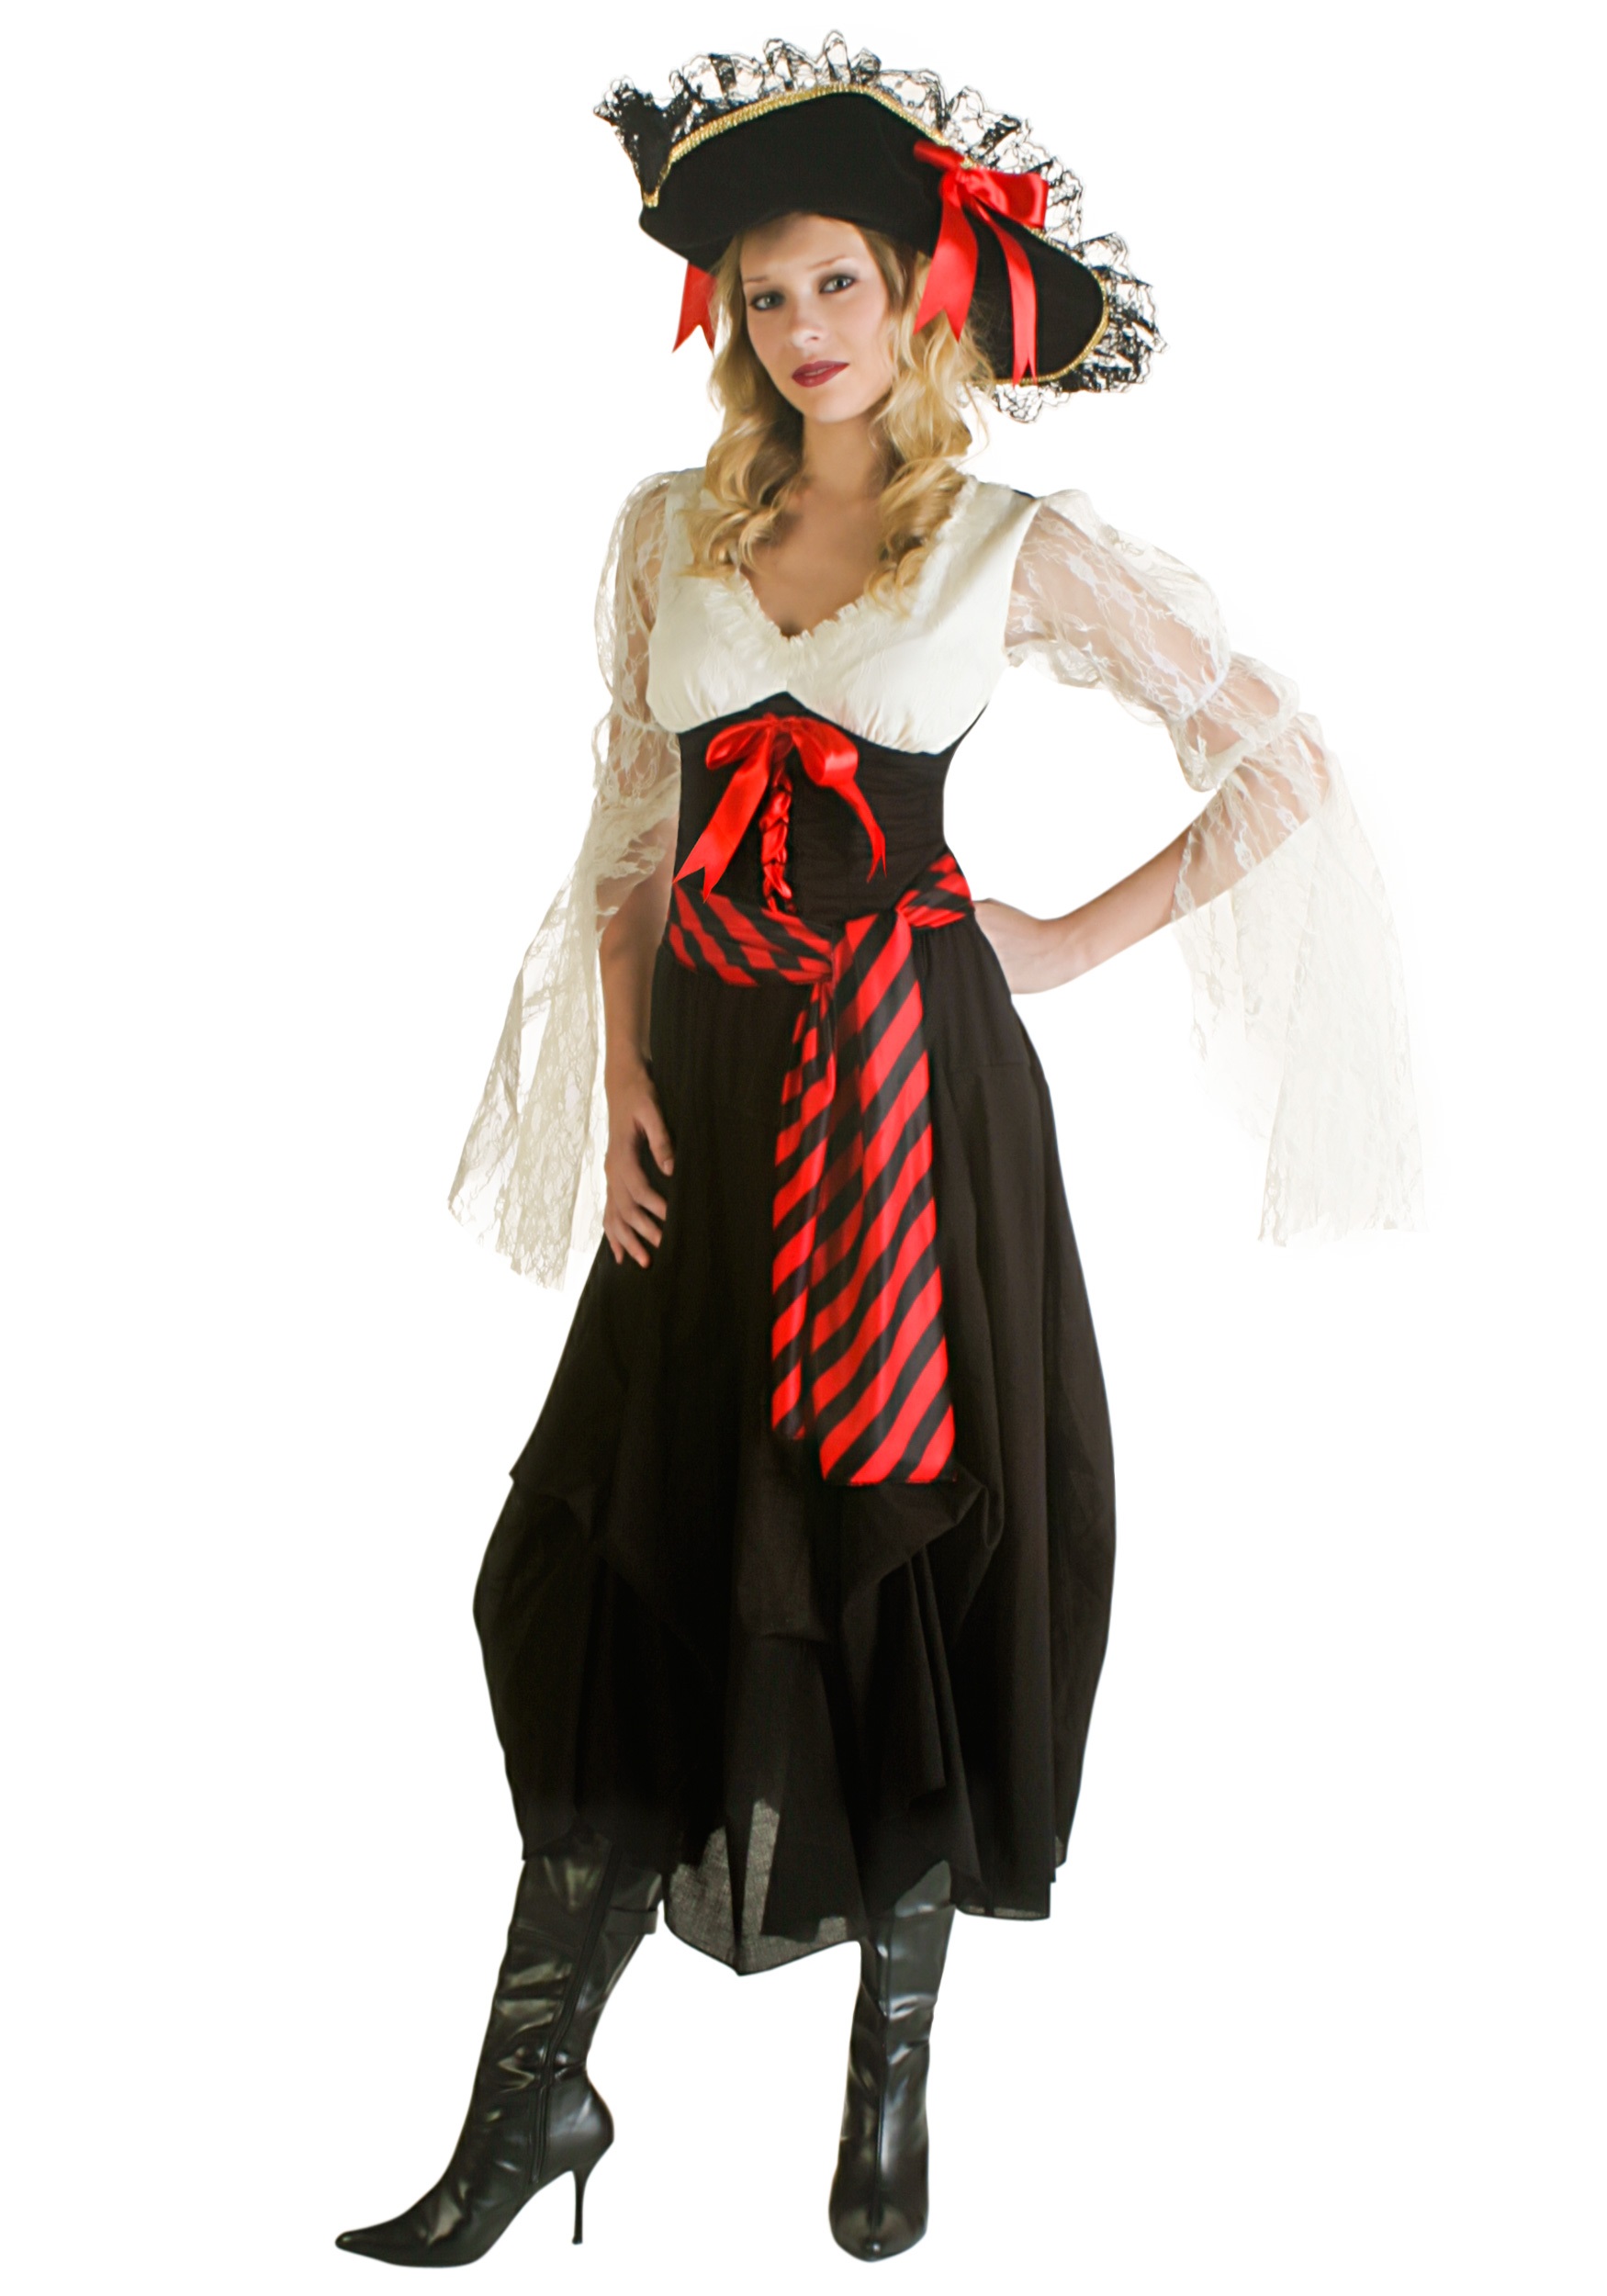 Sexy Female Pirate Costume Halloween Costume Ideas 2019 6697